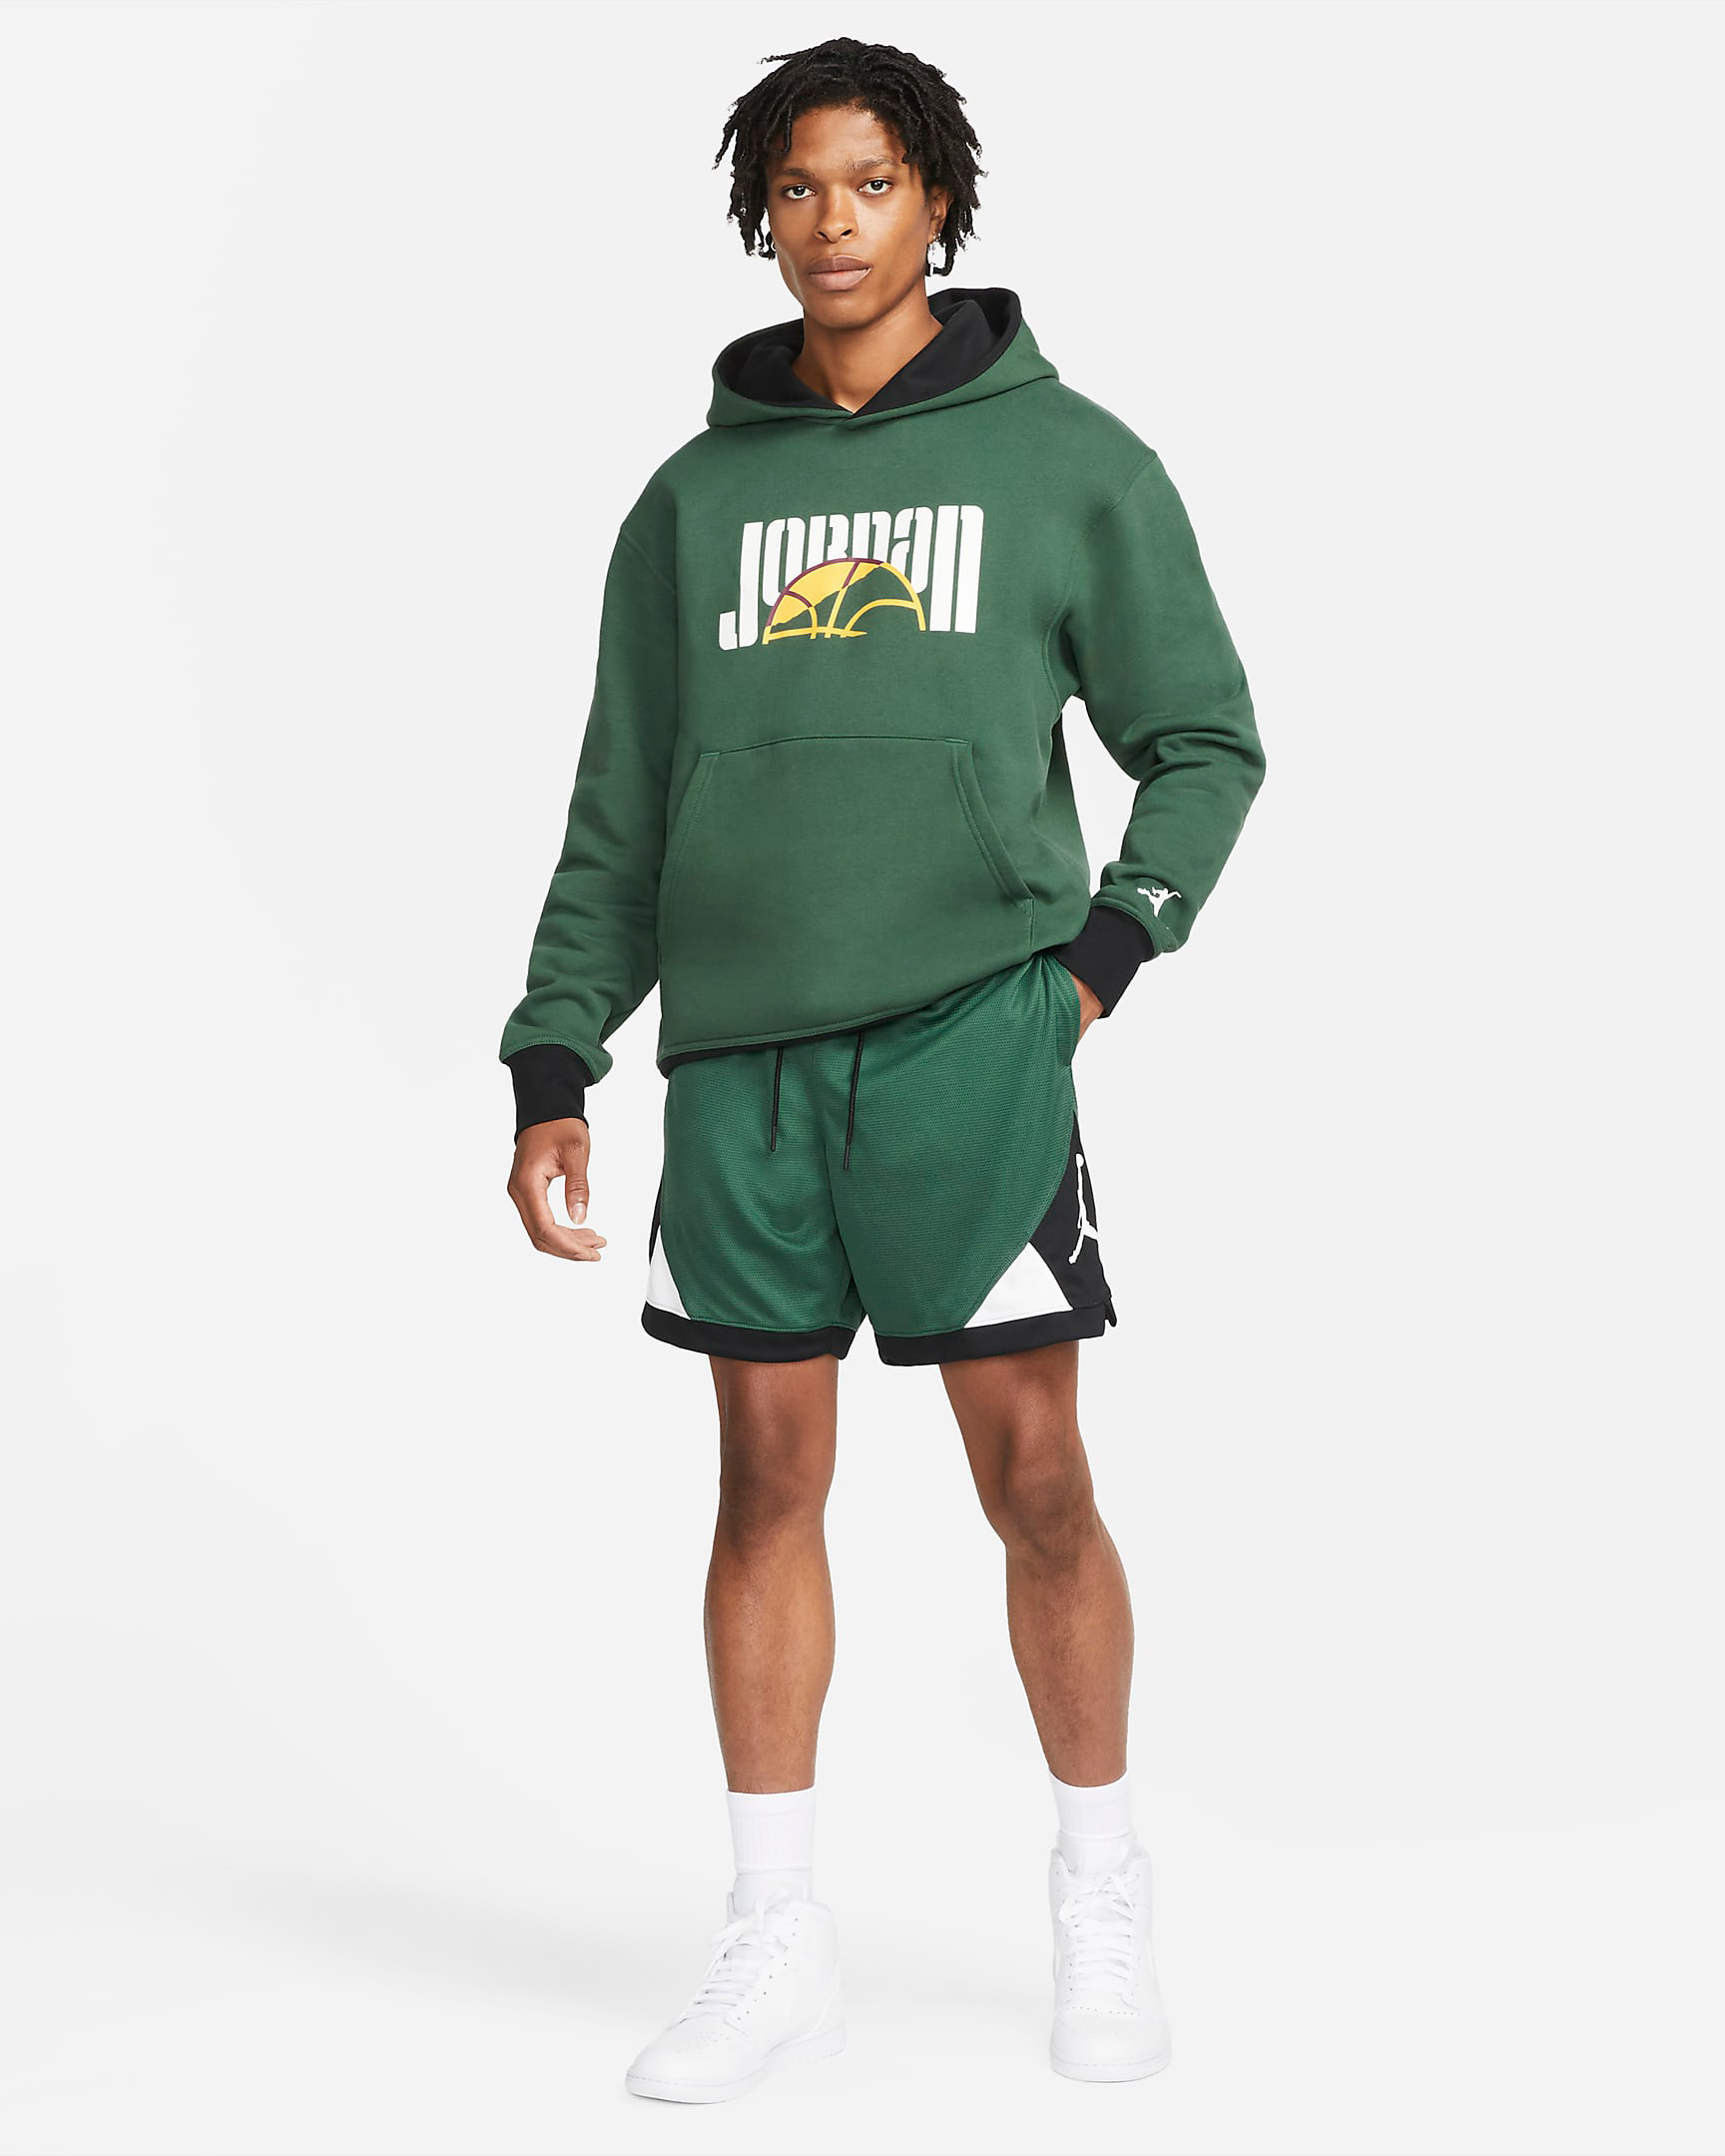 jordan-noble-green-dri-fit-air-diamond-shorts-hoodie-outfit